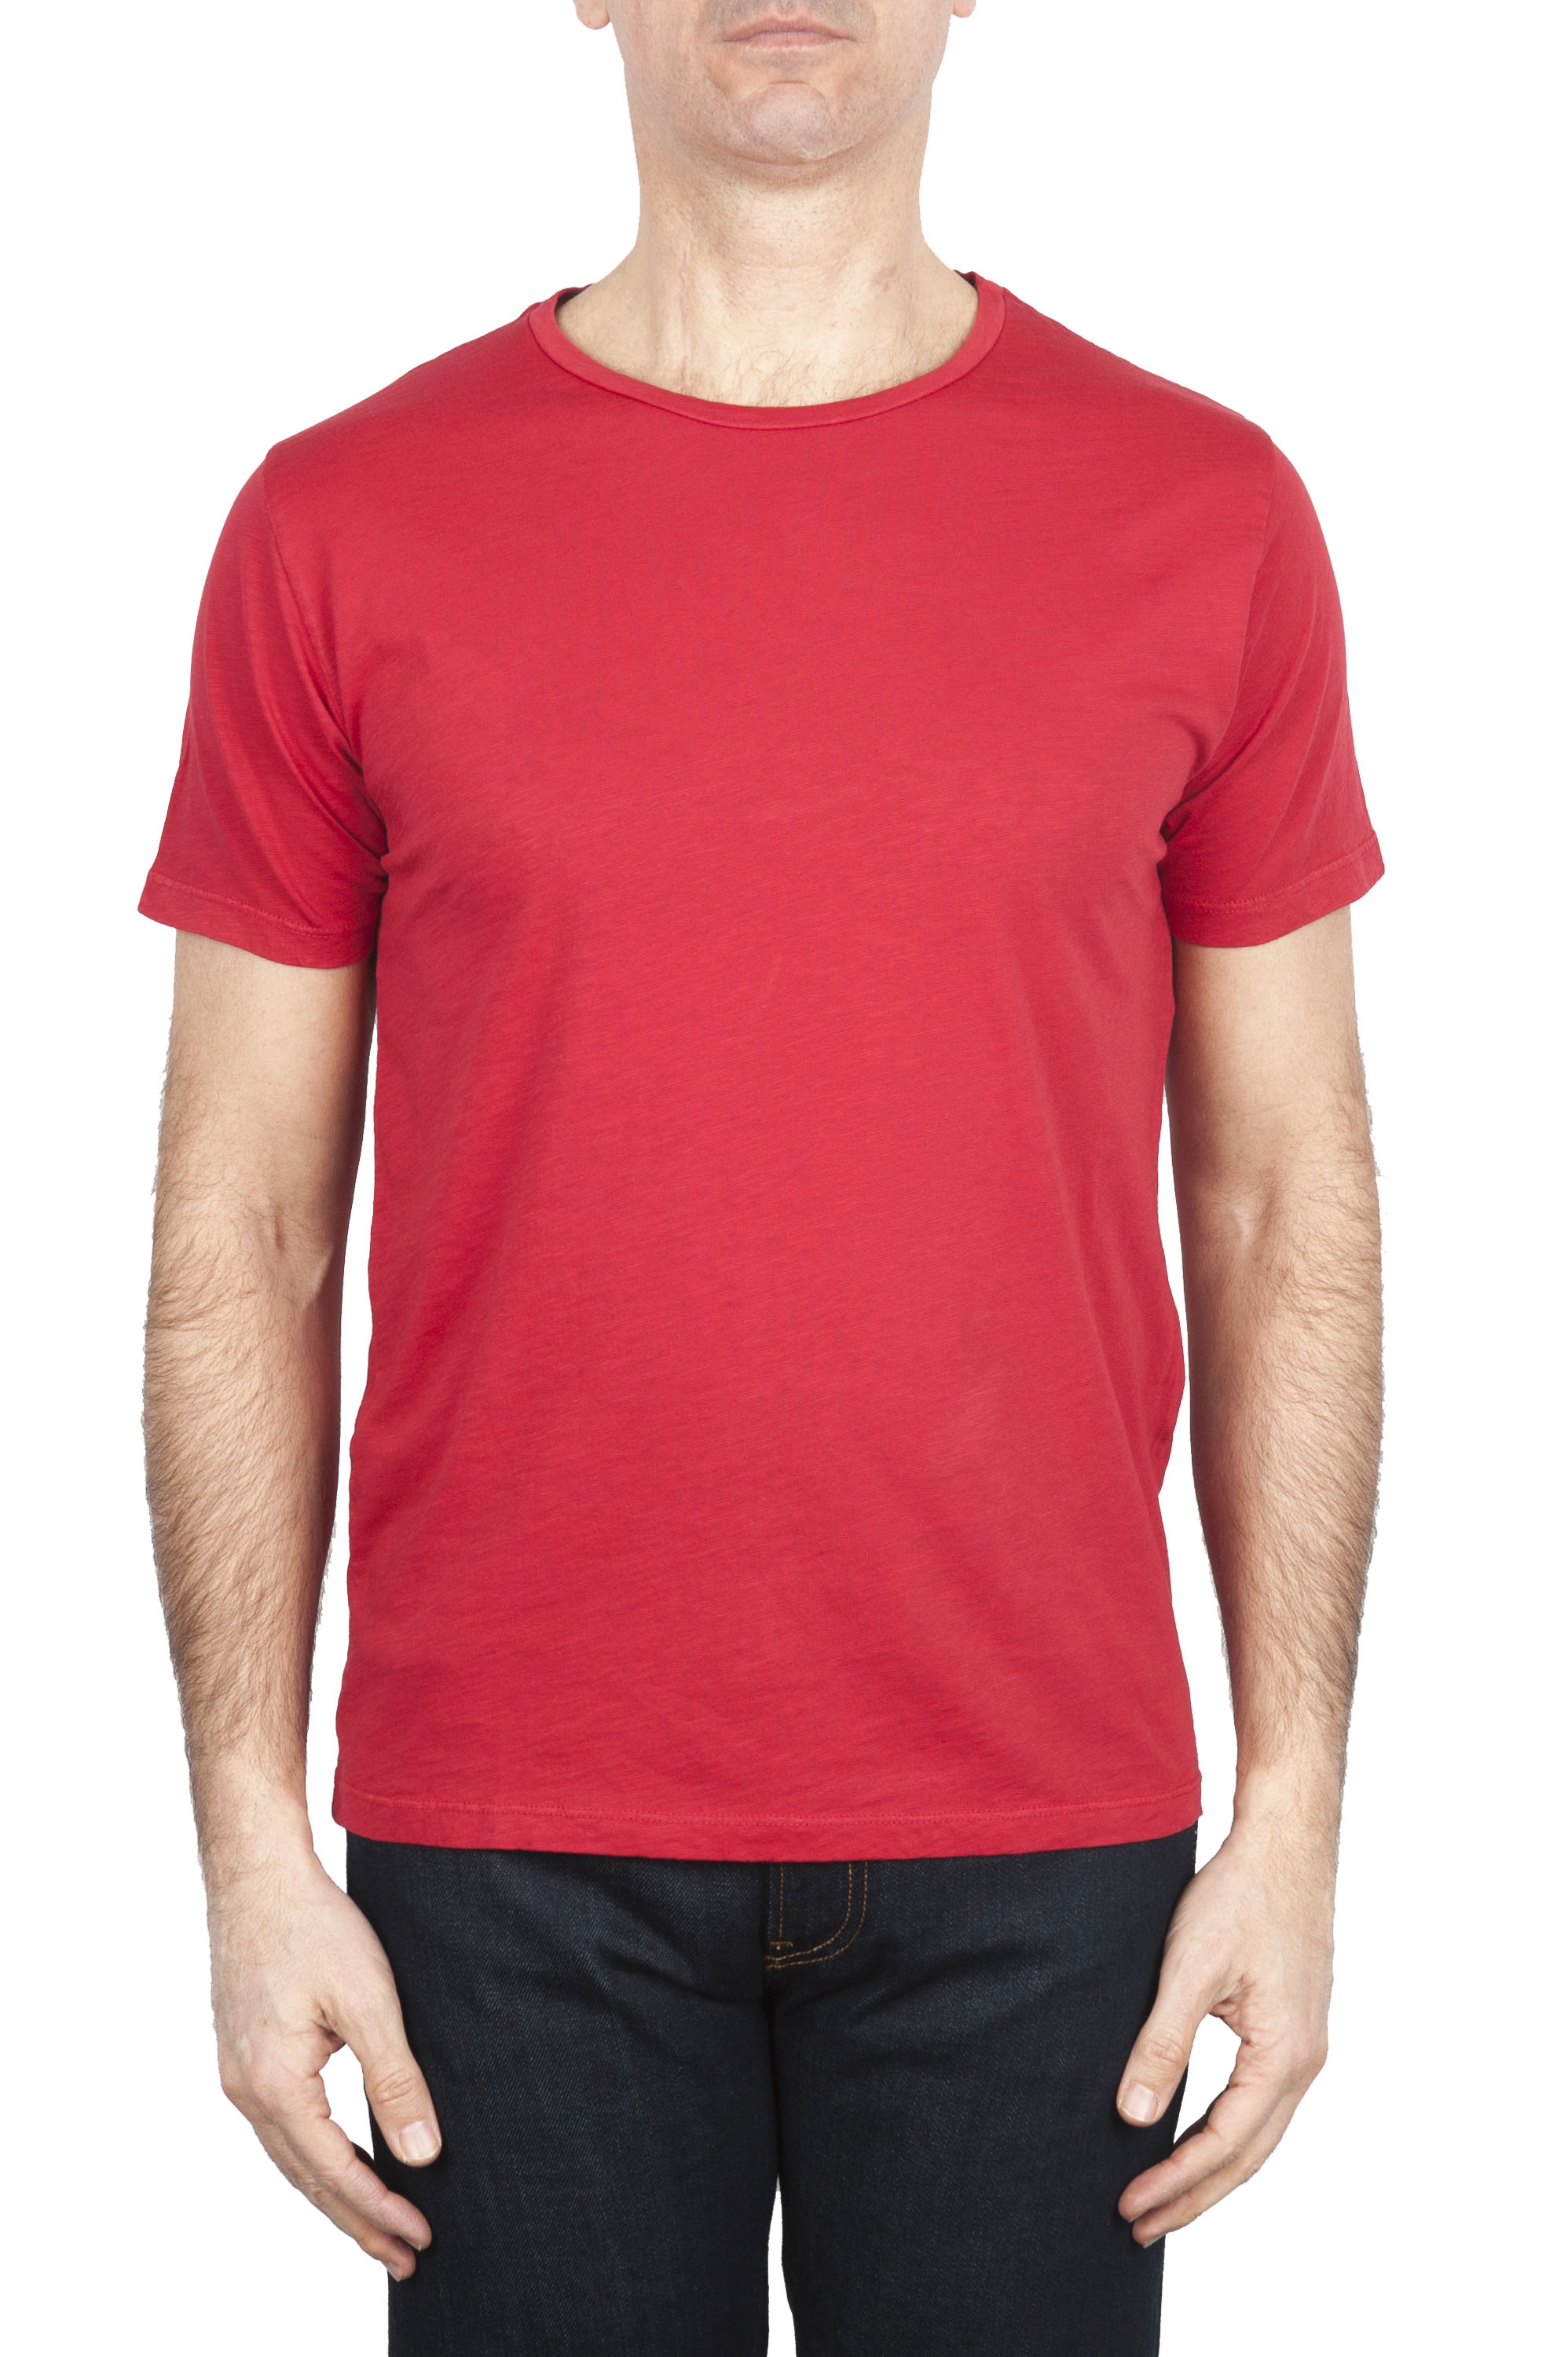 SBU 01647 Flamed cotton scoop neck t-shirt red 01